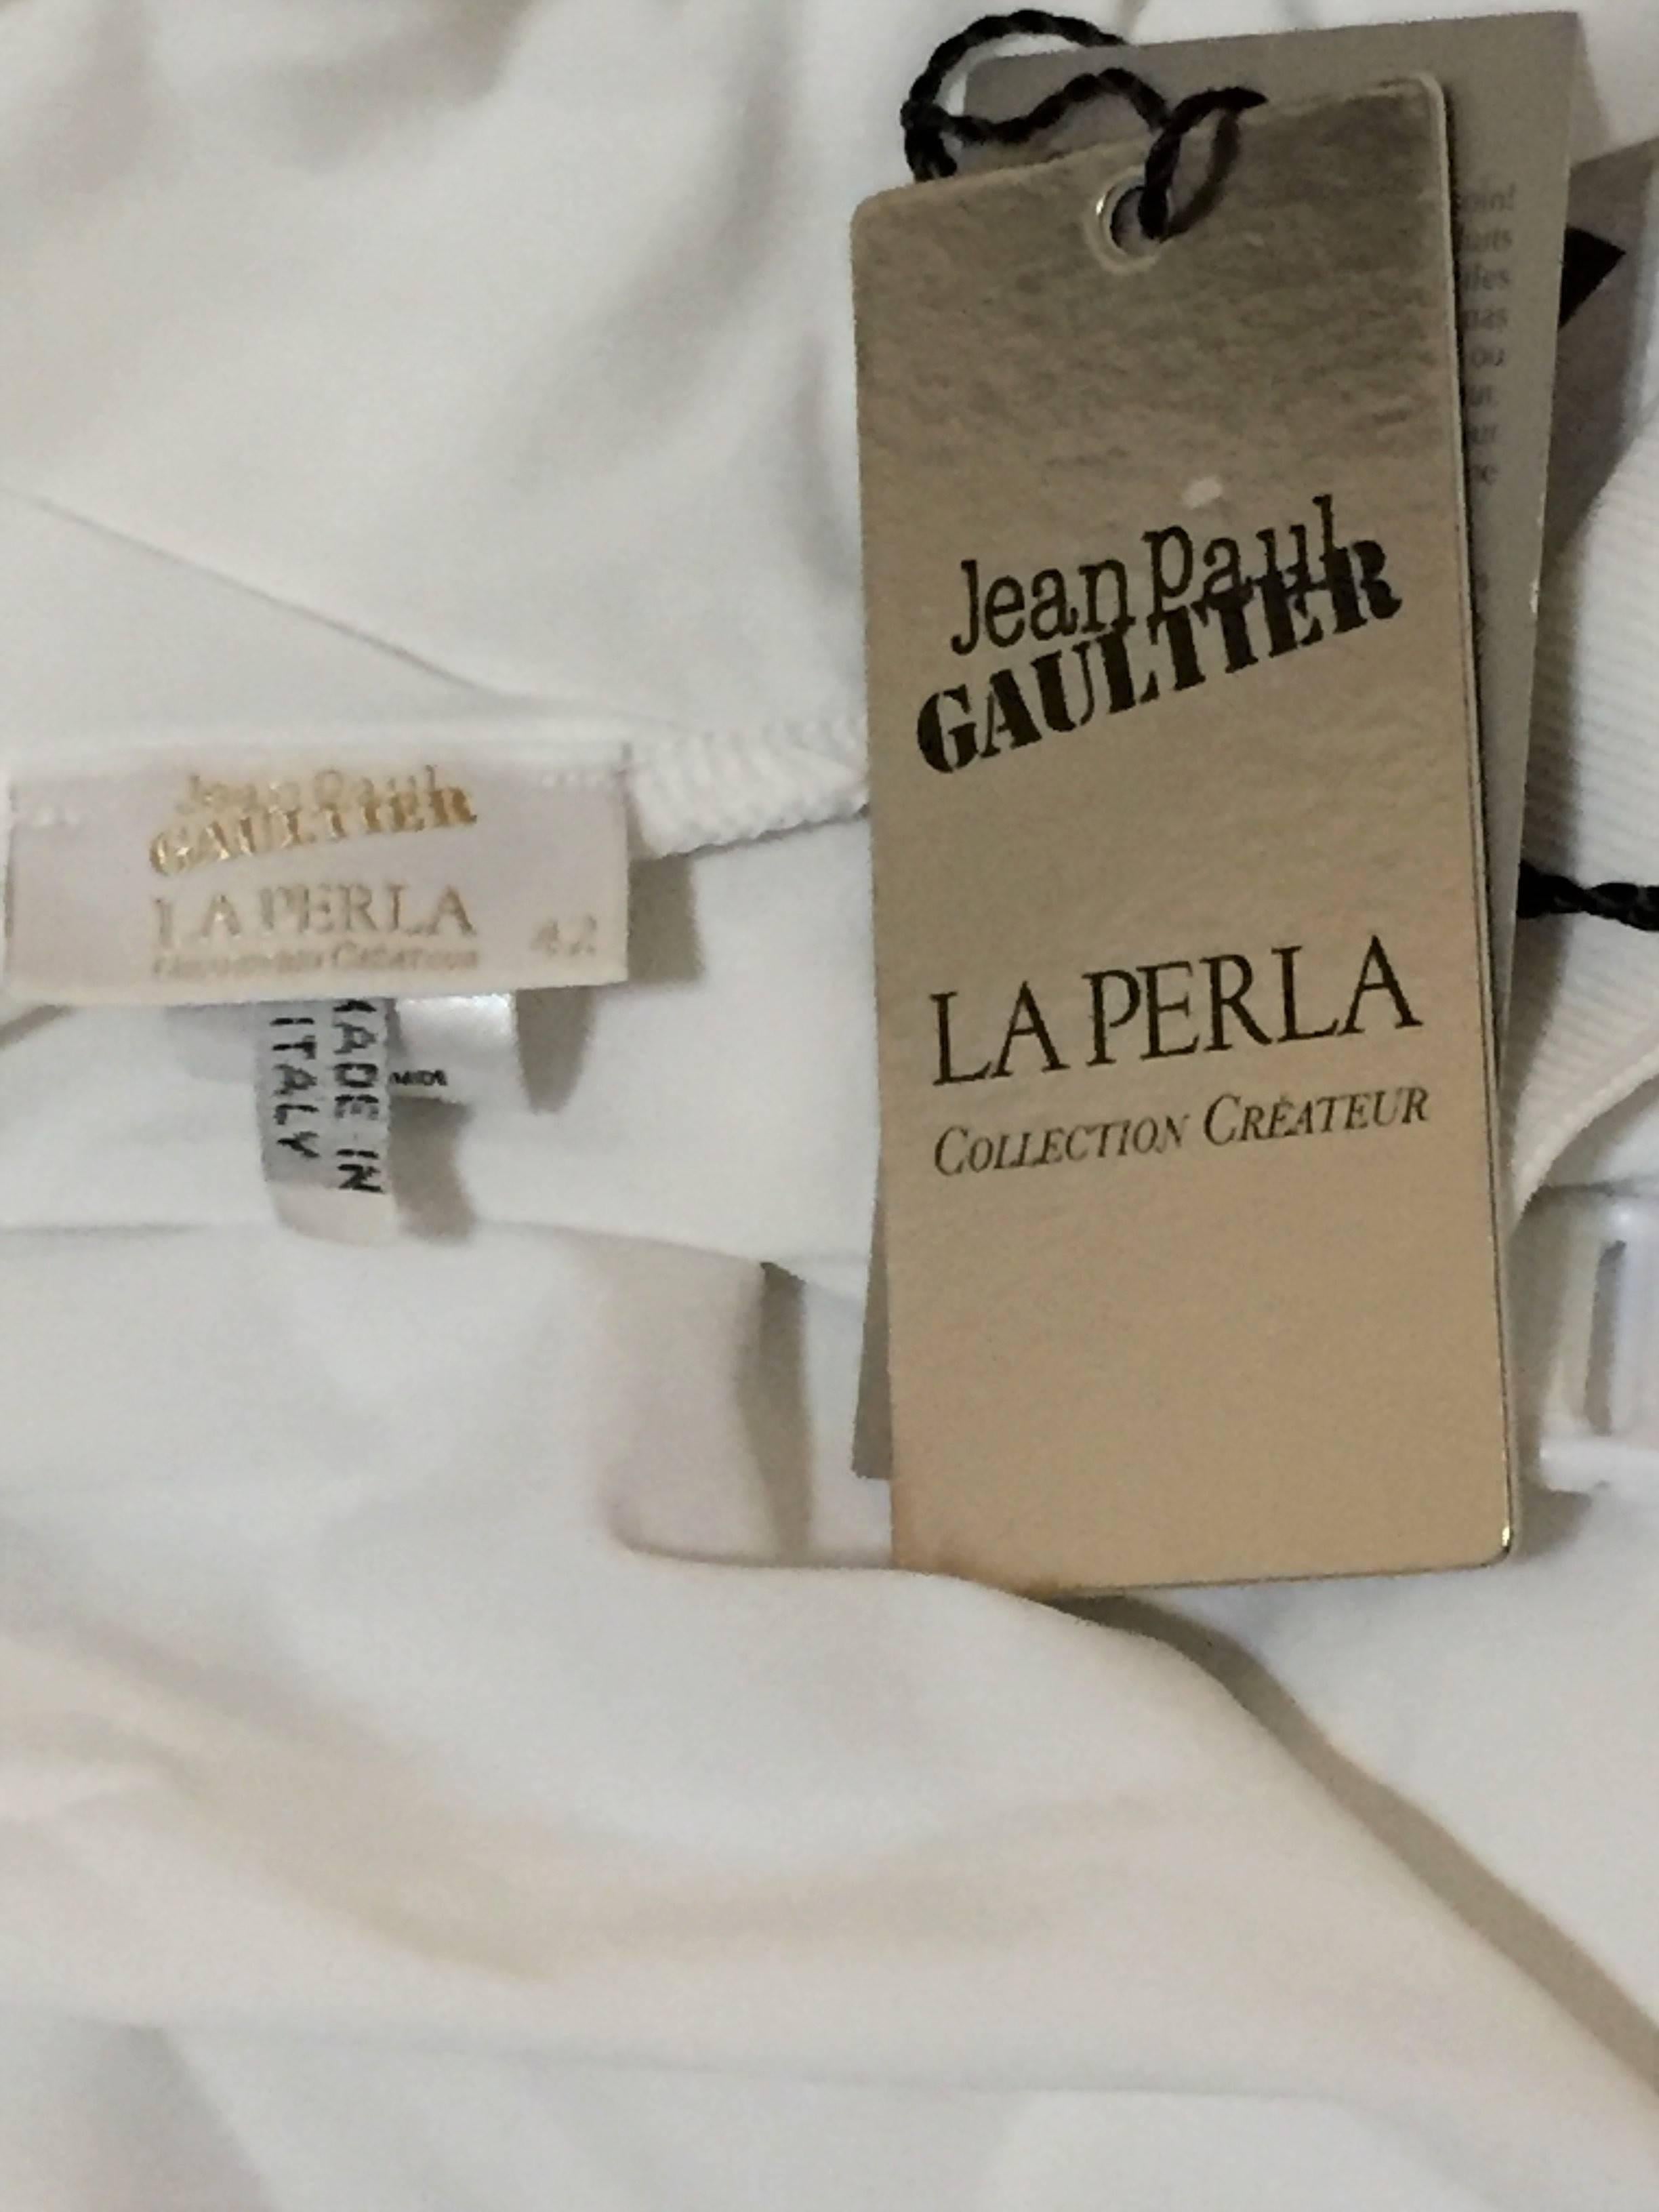 Gray NWT Jean Paul Gaultier for La Perla Sheer White Plunging Halter Dress 42